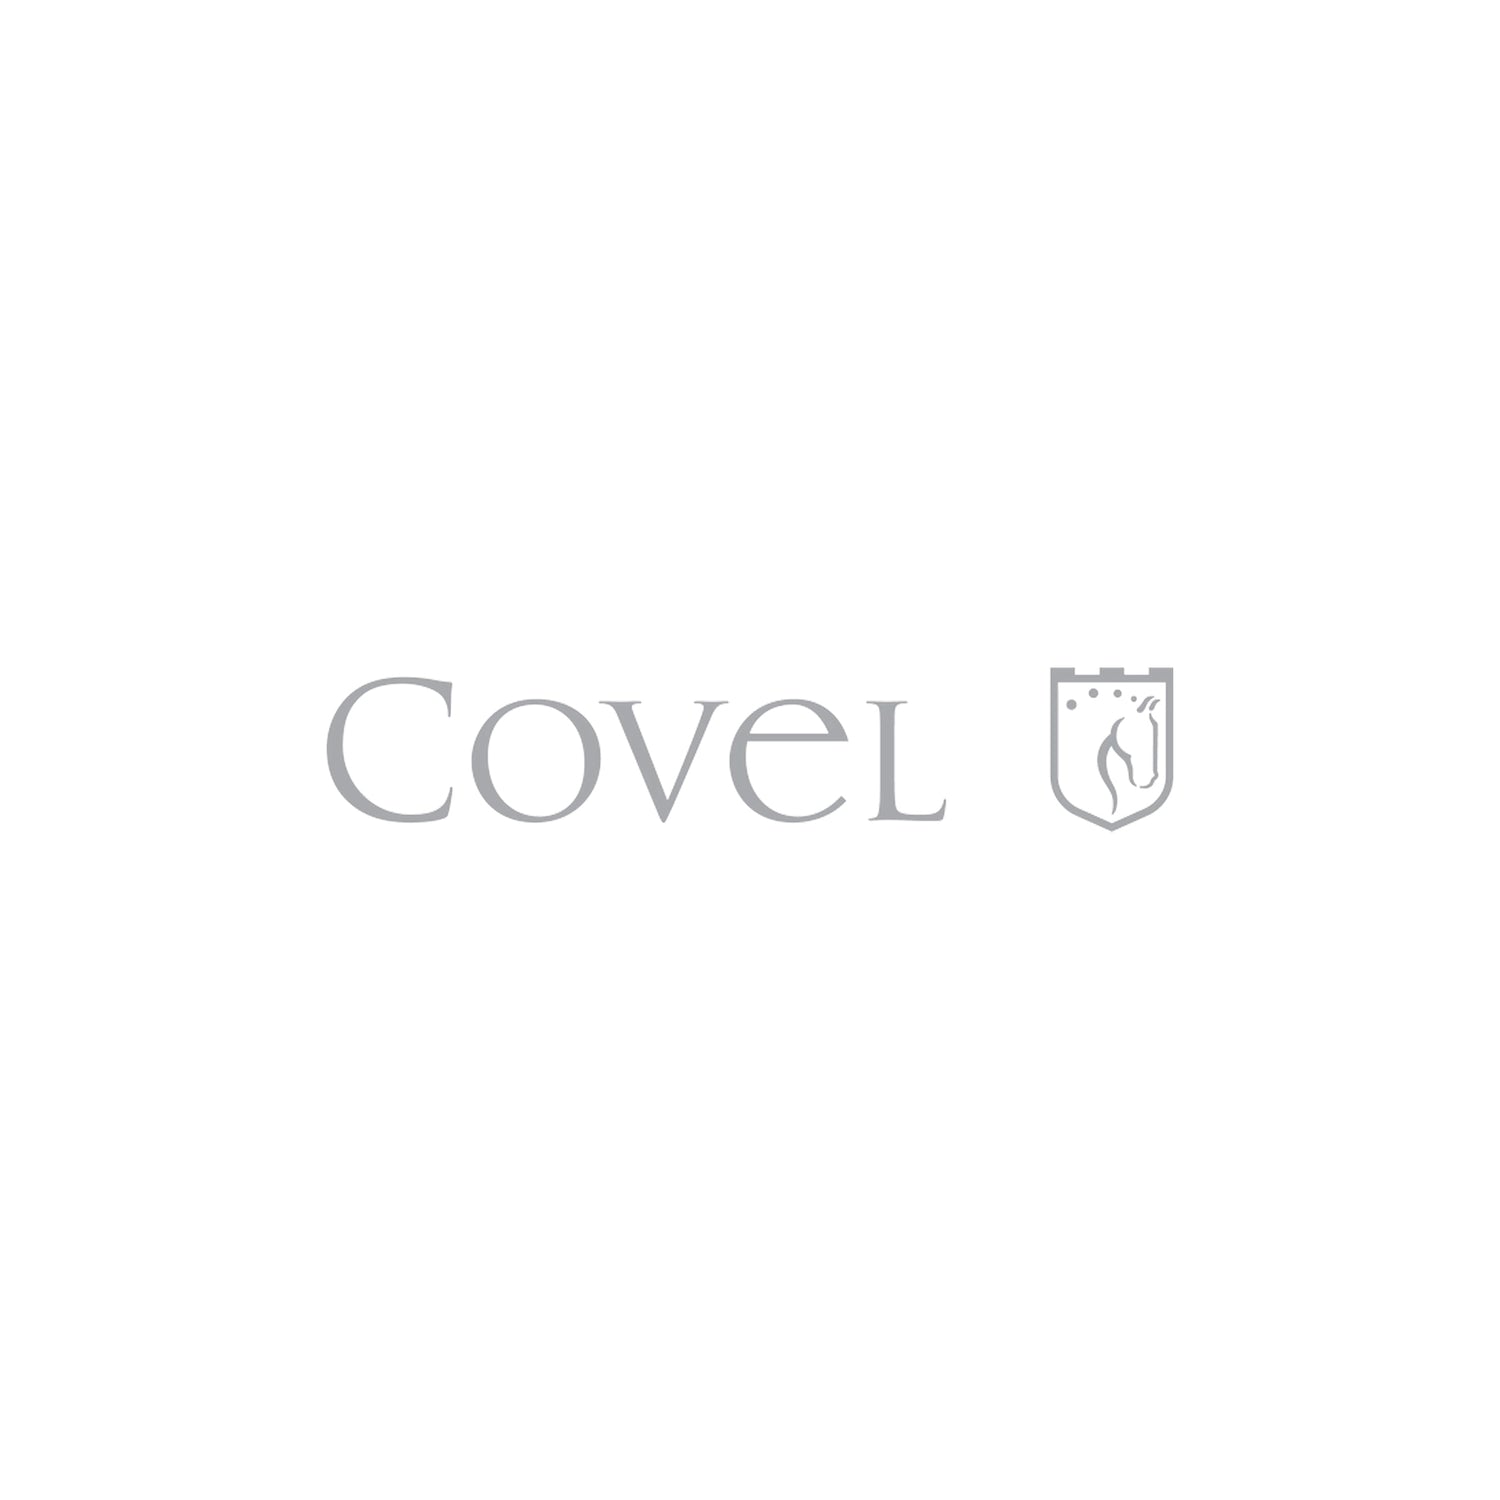 Covel